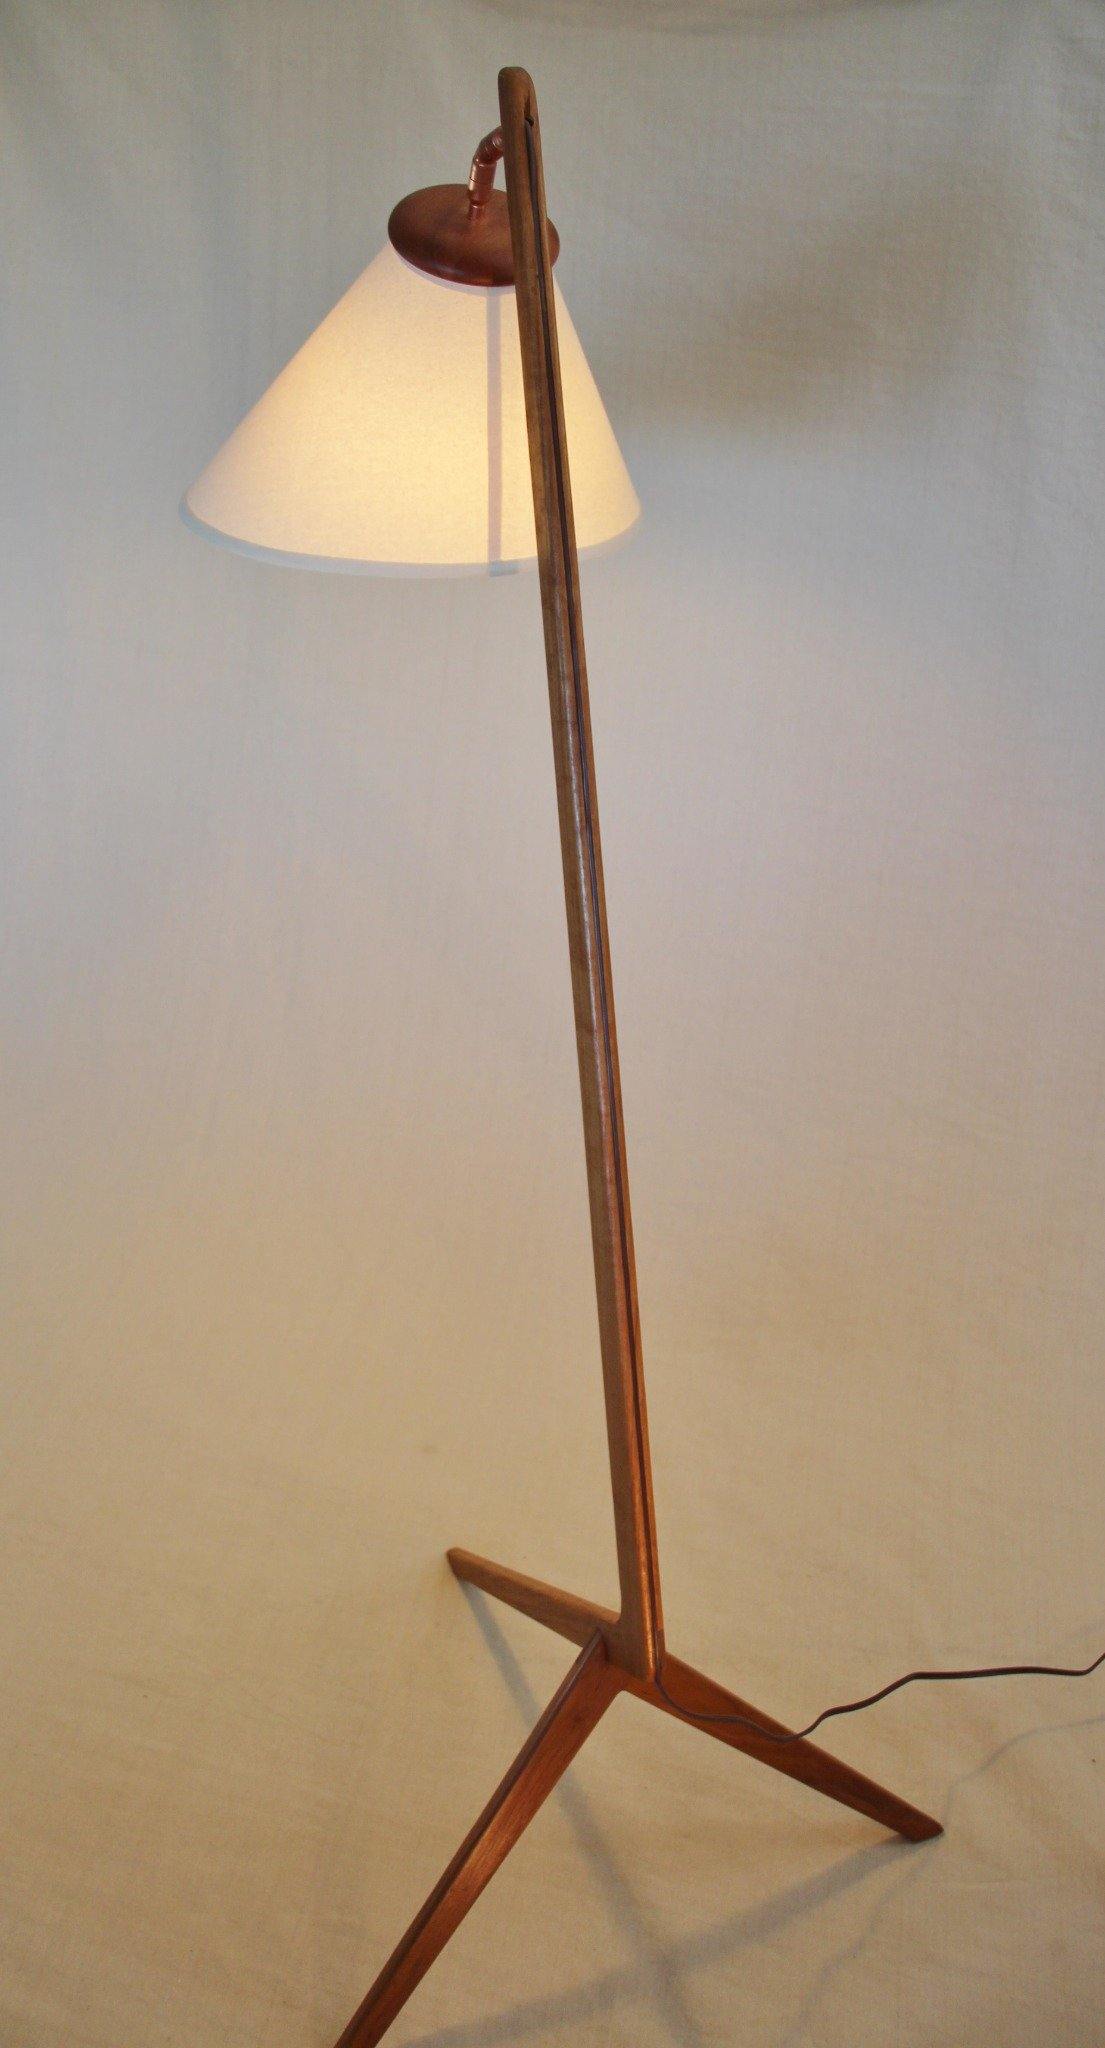 Showing reverse of Reclaimed Teak Floor Lamp with Grasshopper Legs - Cook Street Vintage